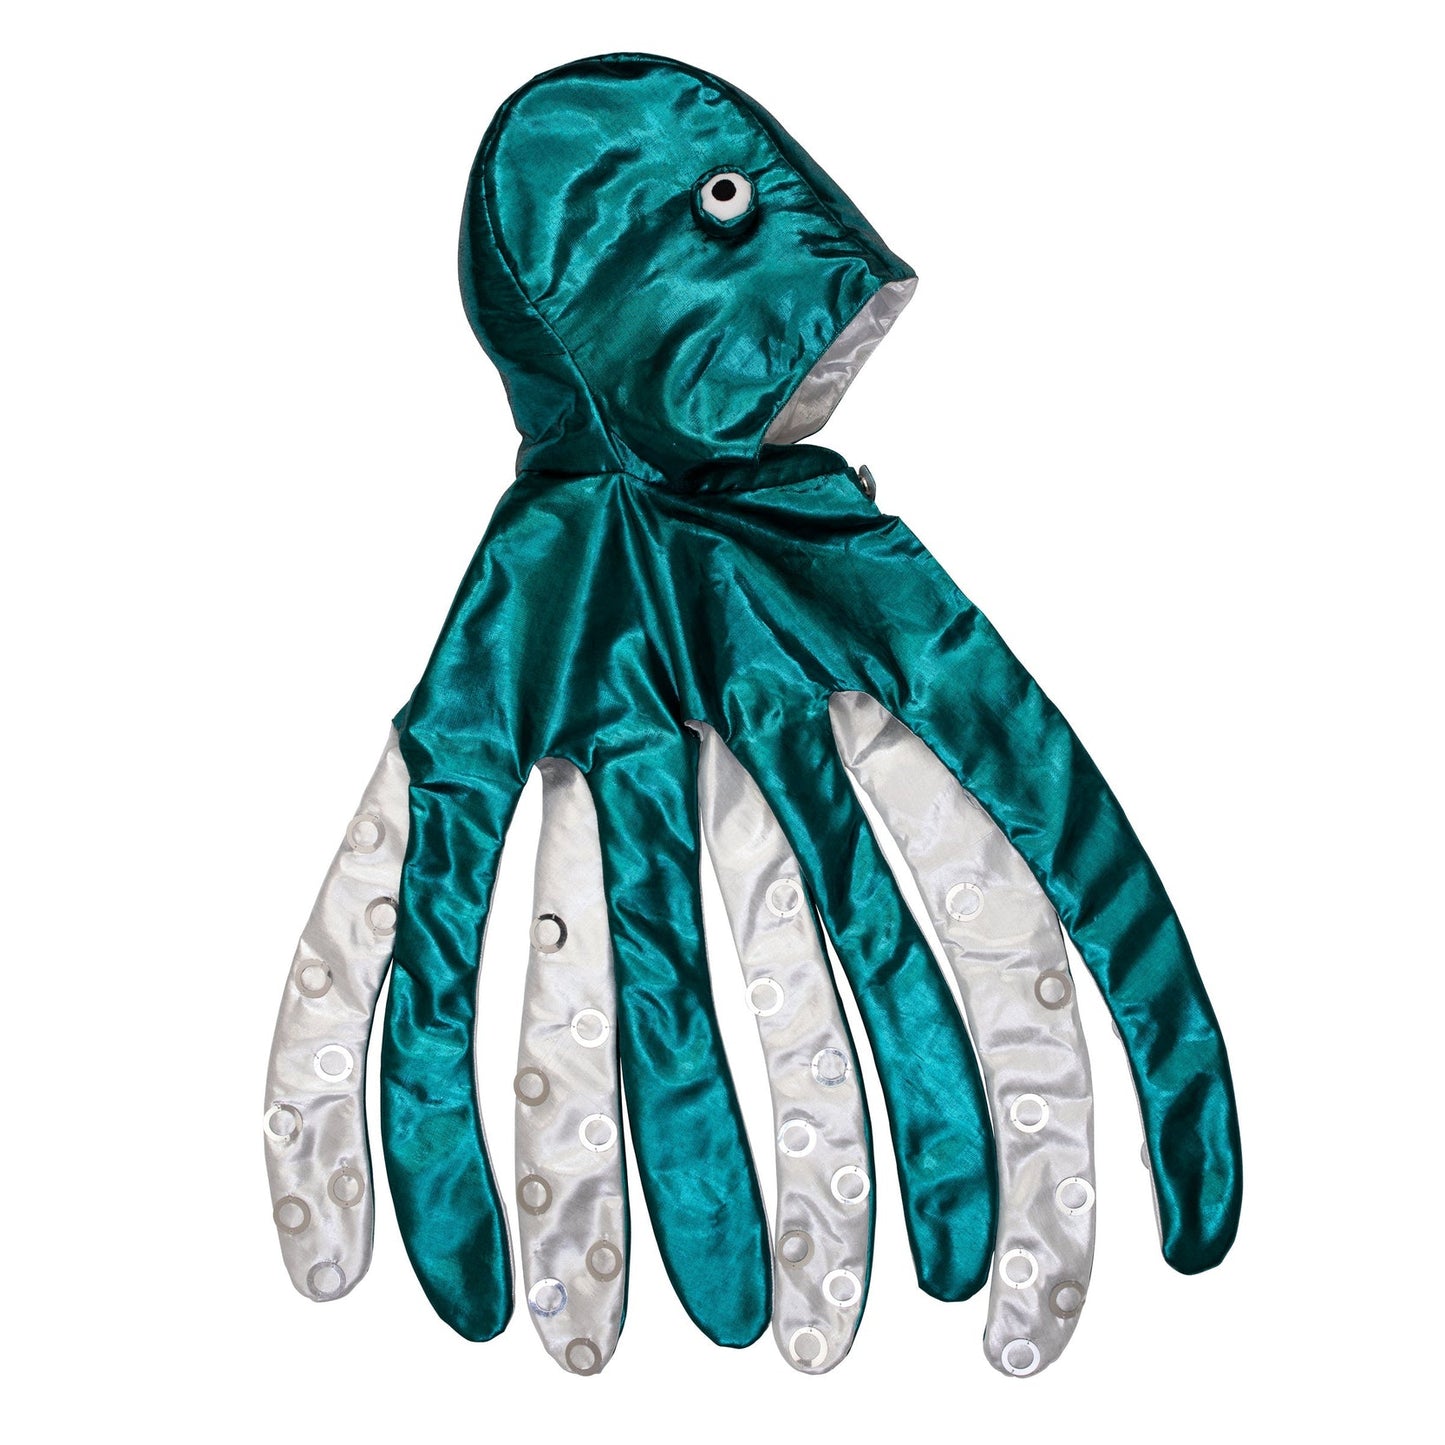 Octopus Costume Age 3-6